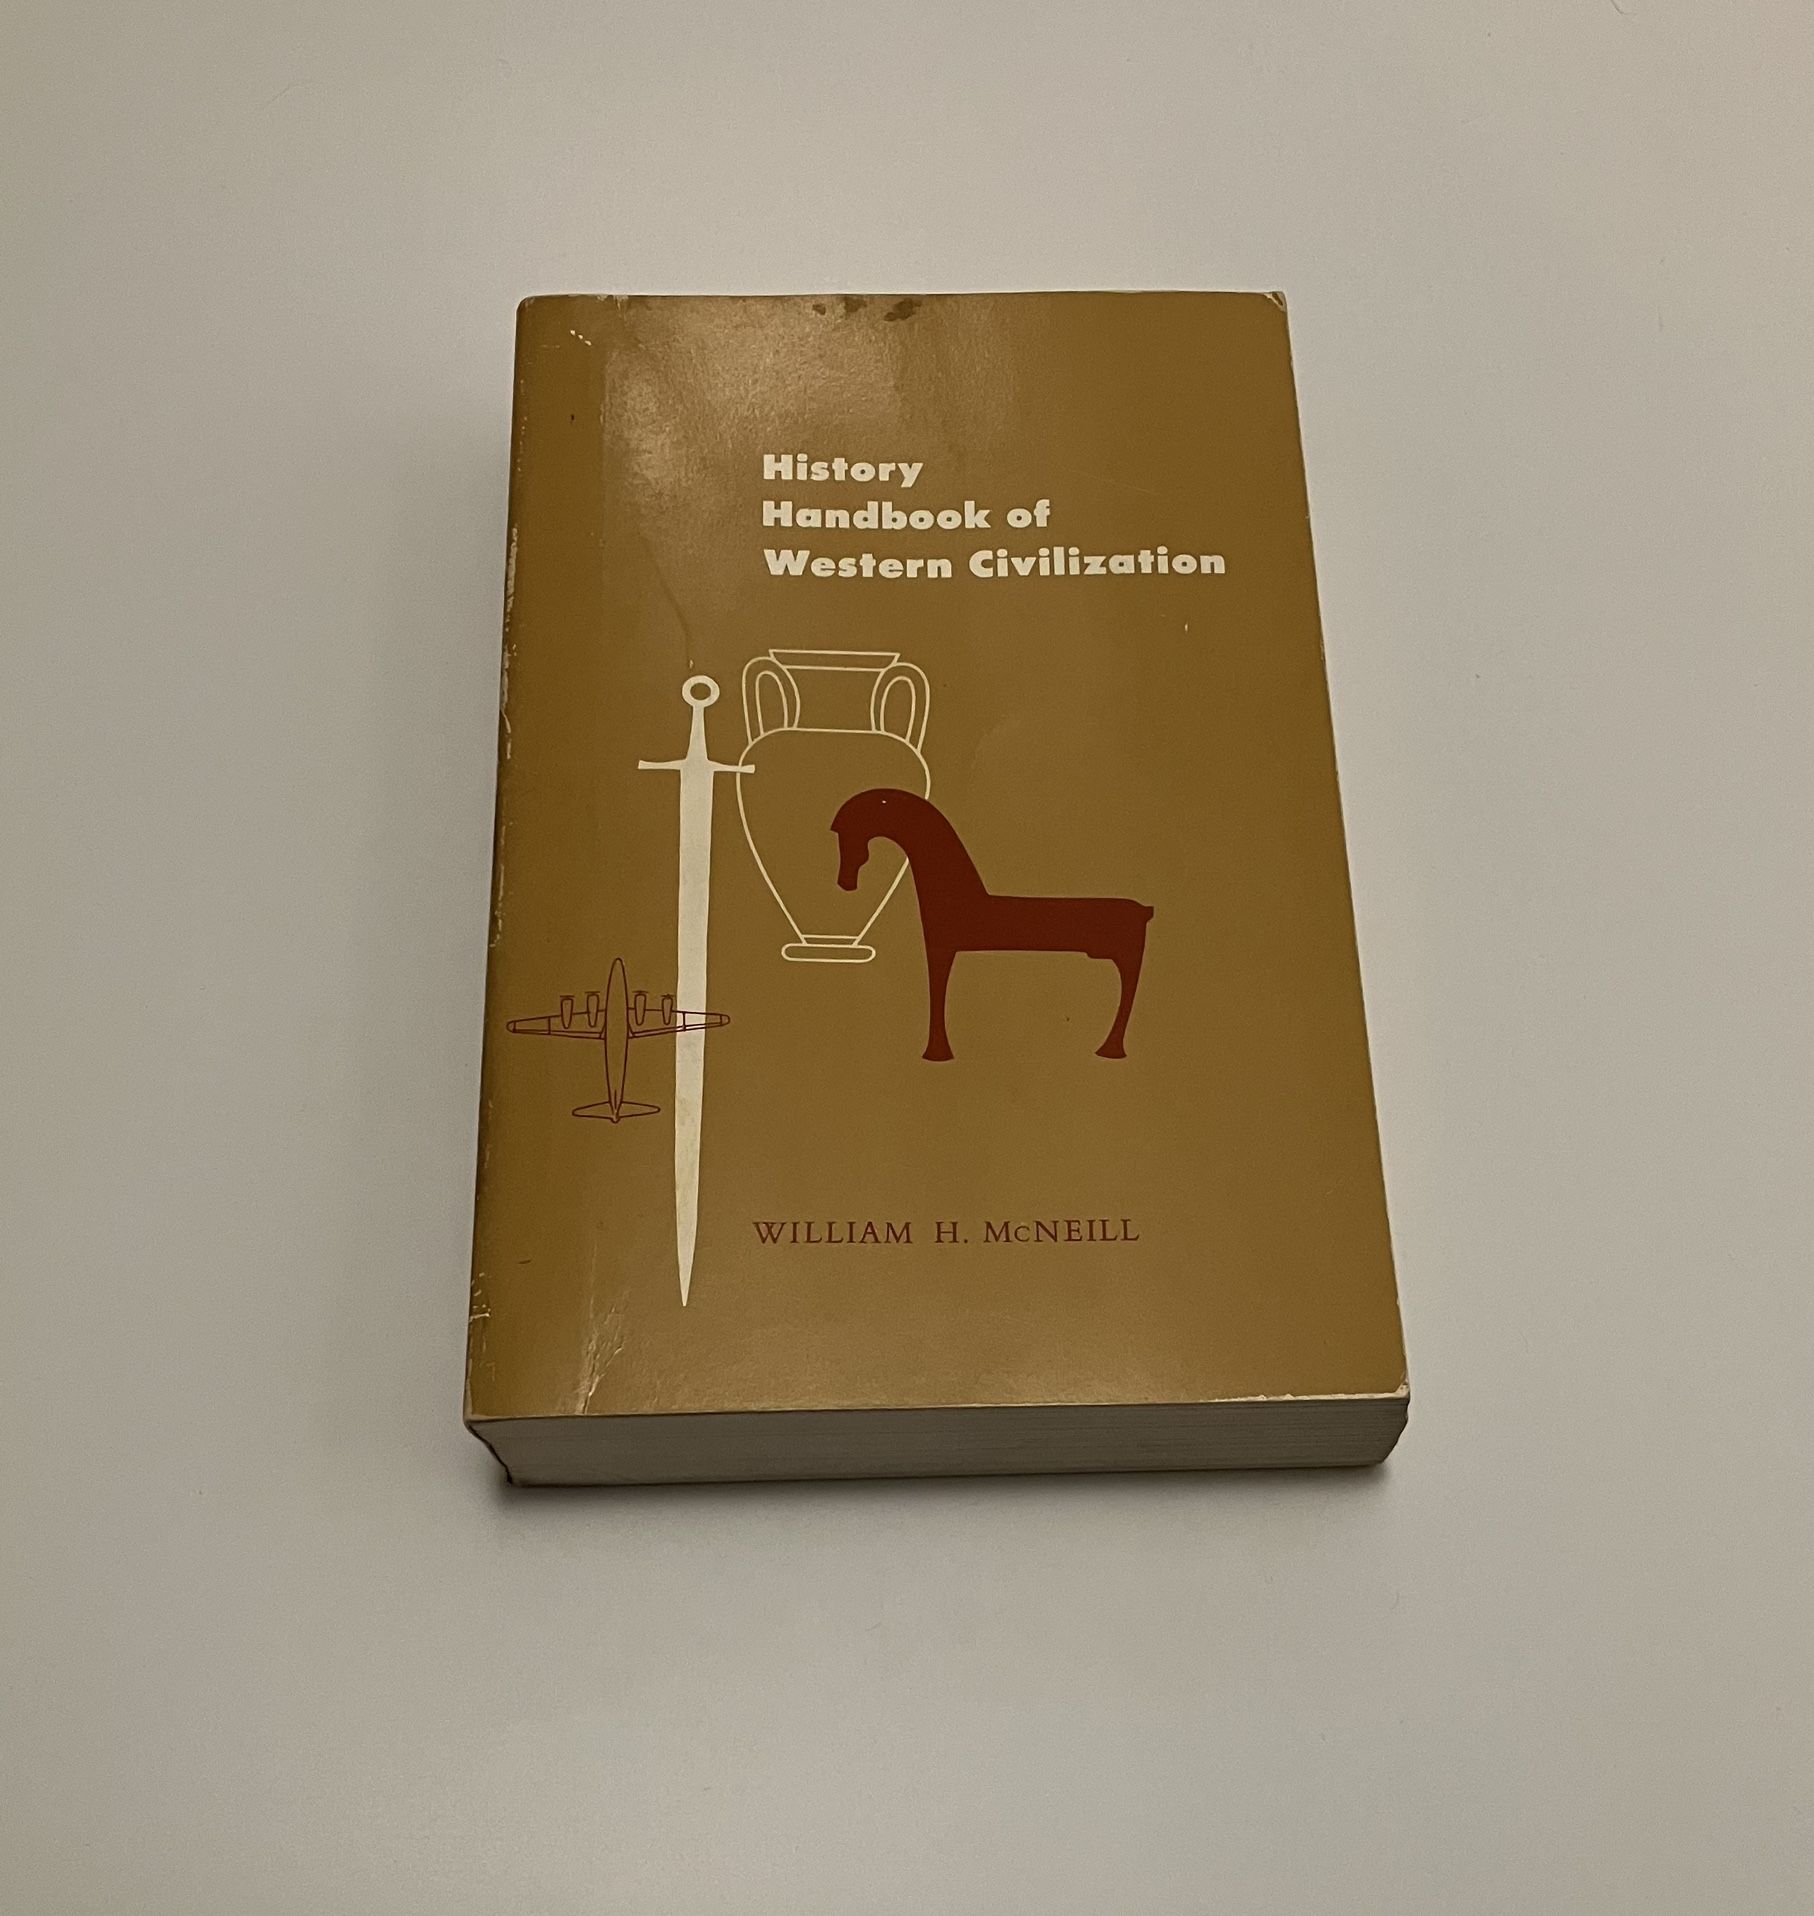 History Handbook of Western Civilization (1953) by William H. McNeill